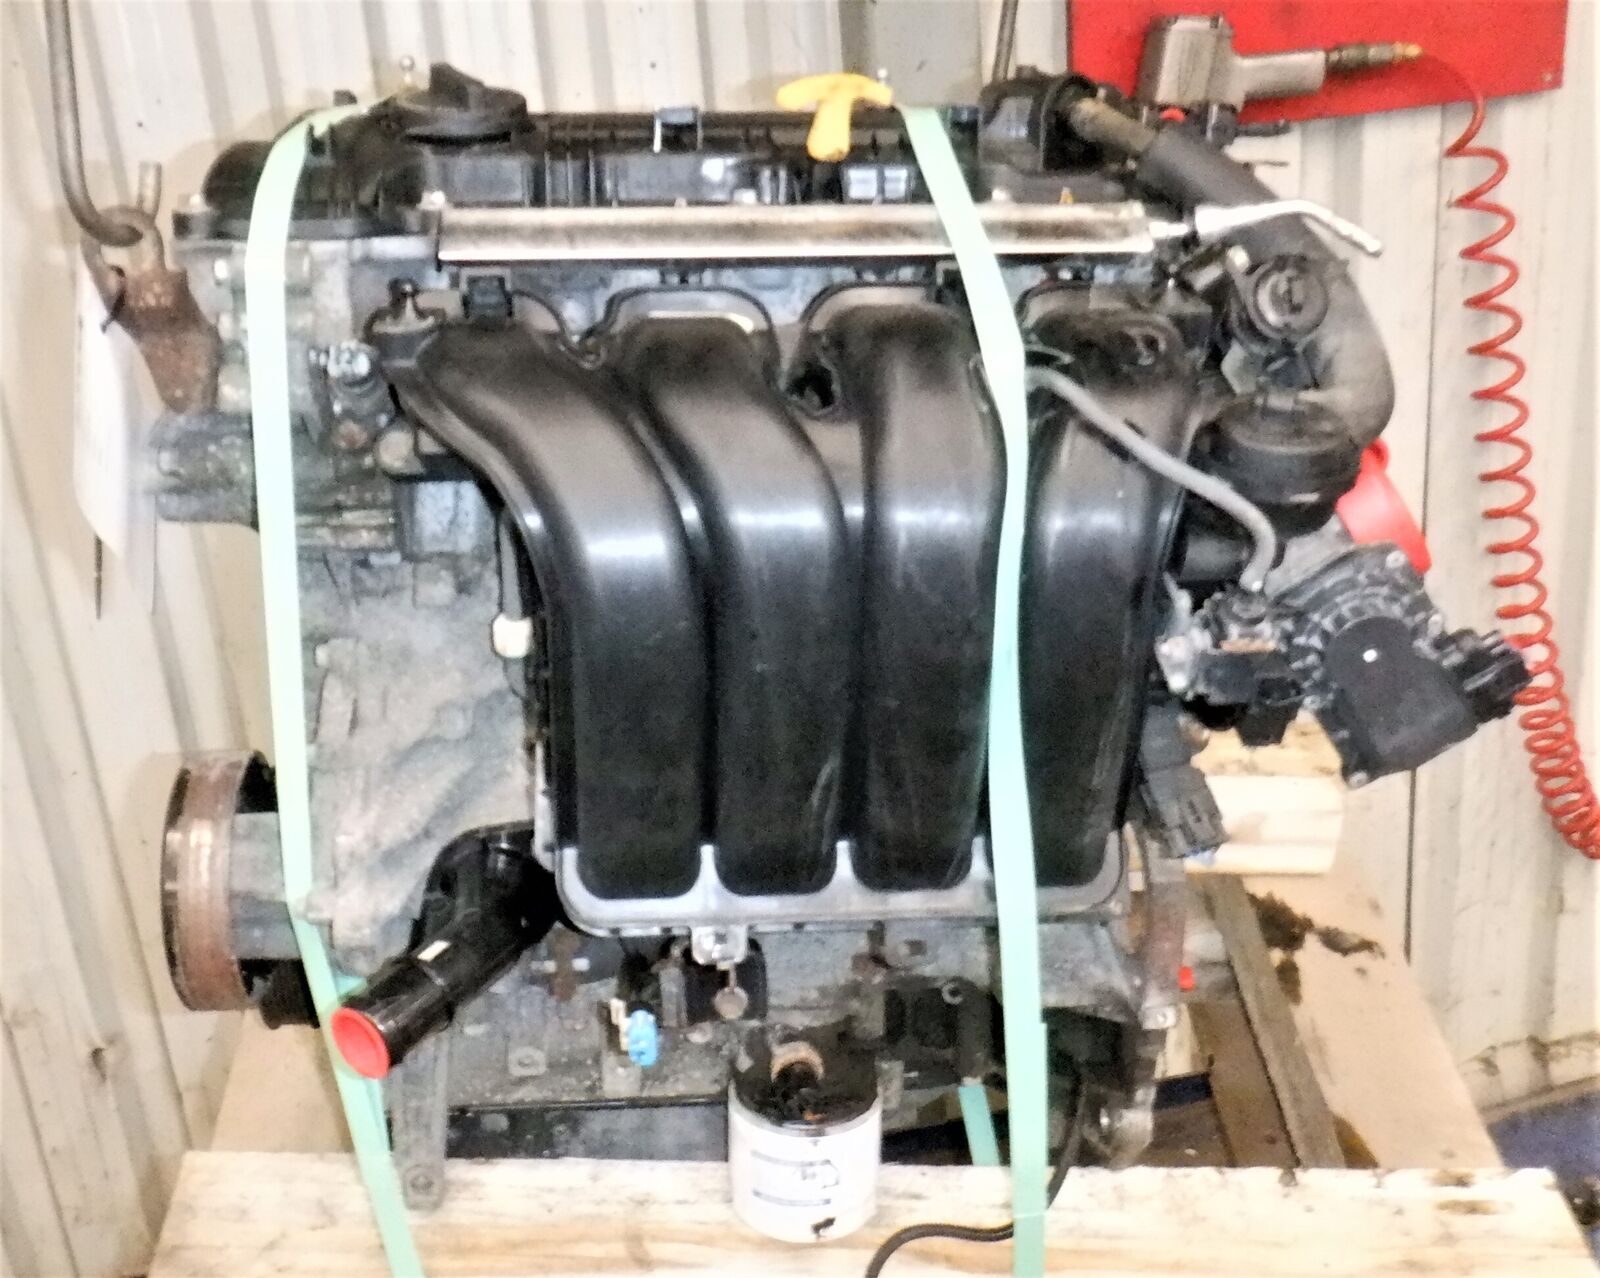 Kia Soul 2.0 Liter engine 2010 to 2016